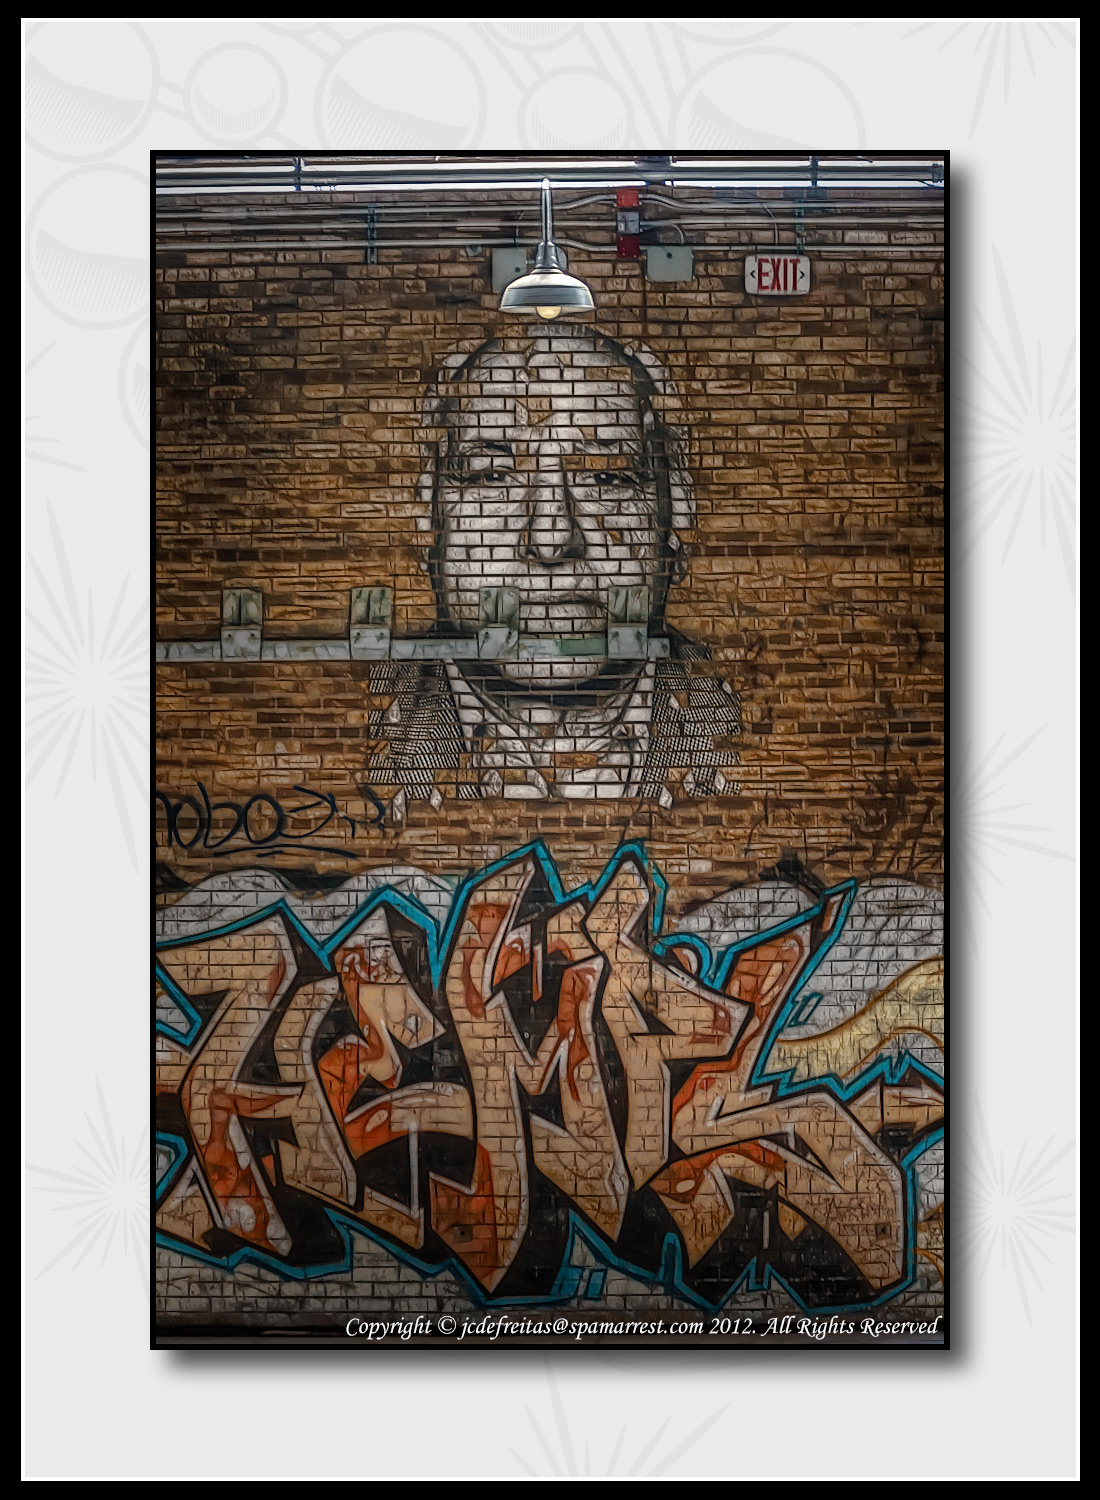 2012 - Graffiti -  Evergreen Brick Works - Toronto, Ontario - Canada